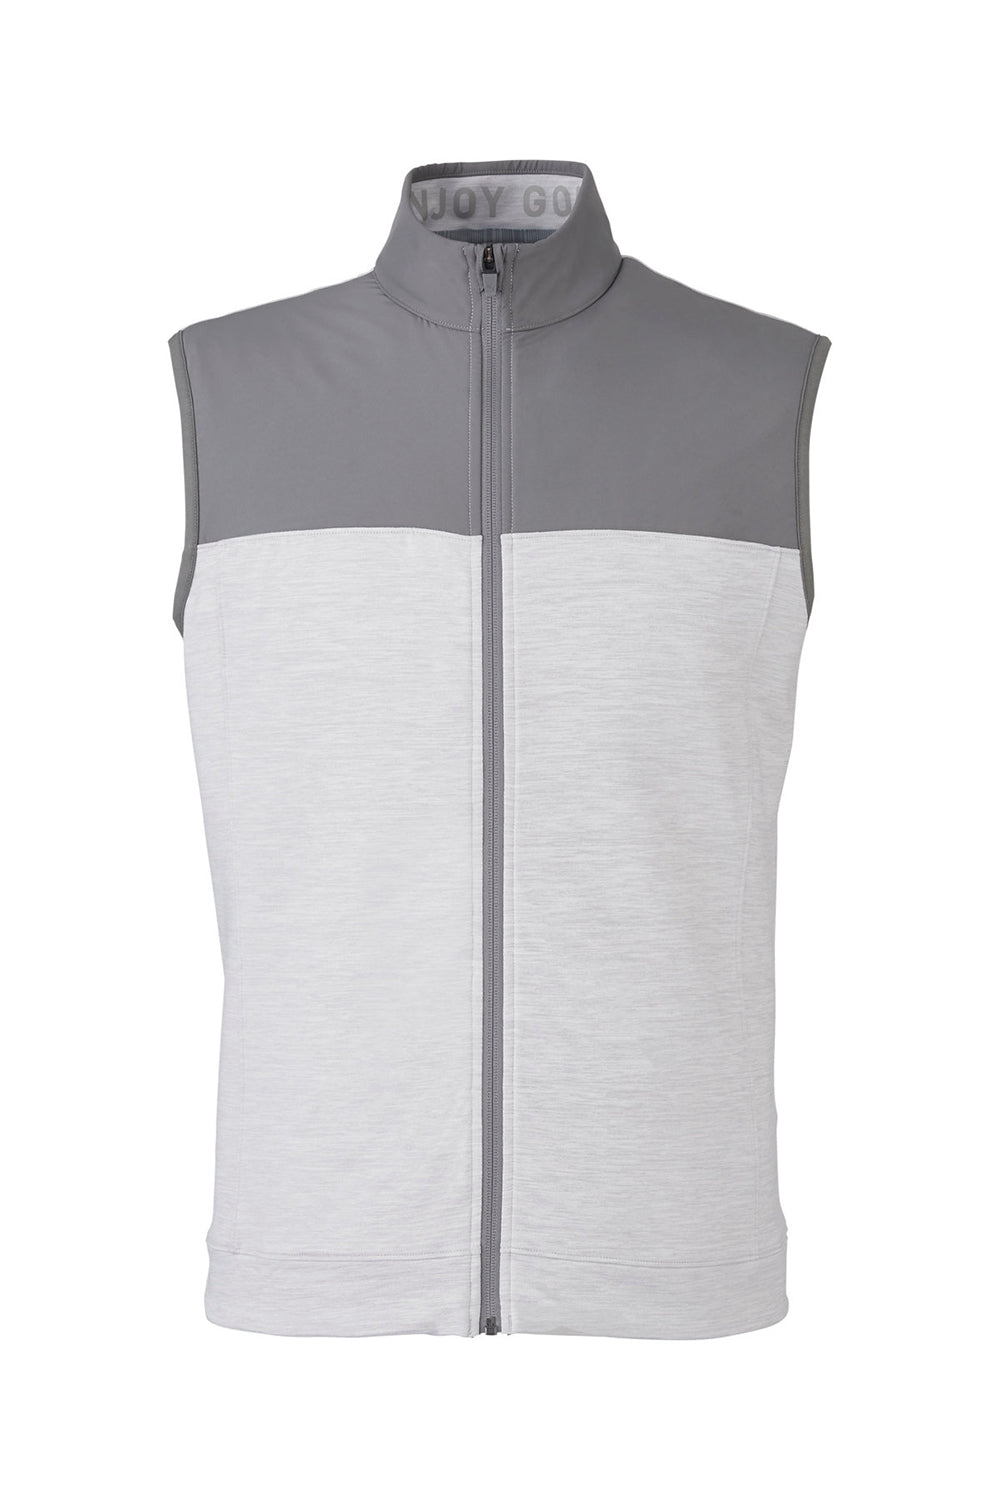 Puma 537465 Mens Cloudspun Colorblock Full Zip Vest Quiet Shade Grey/Heather High Rise Grey Flat Front